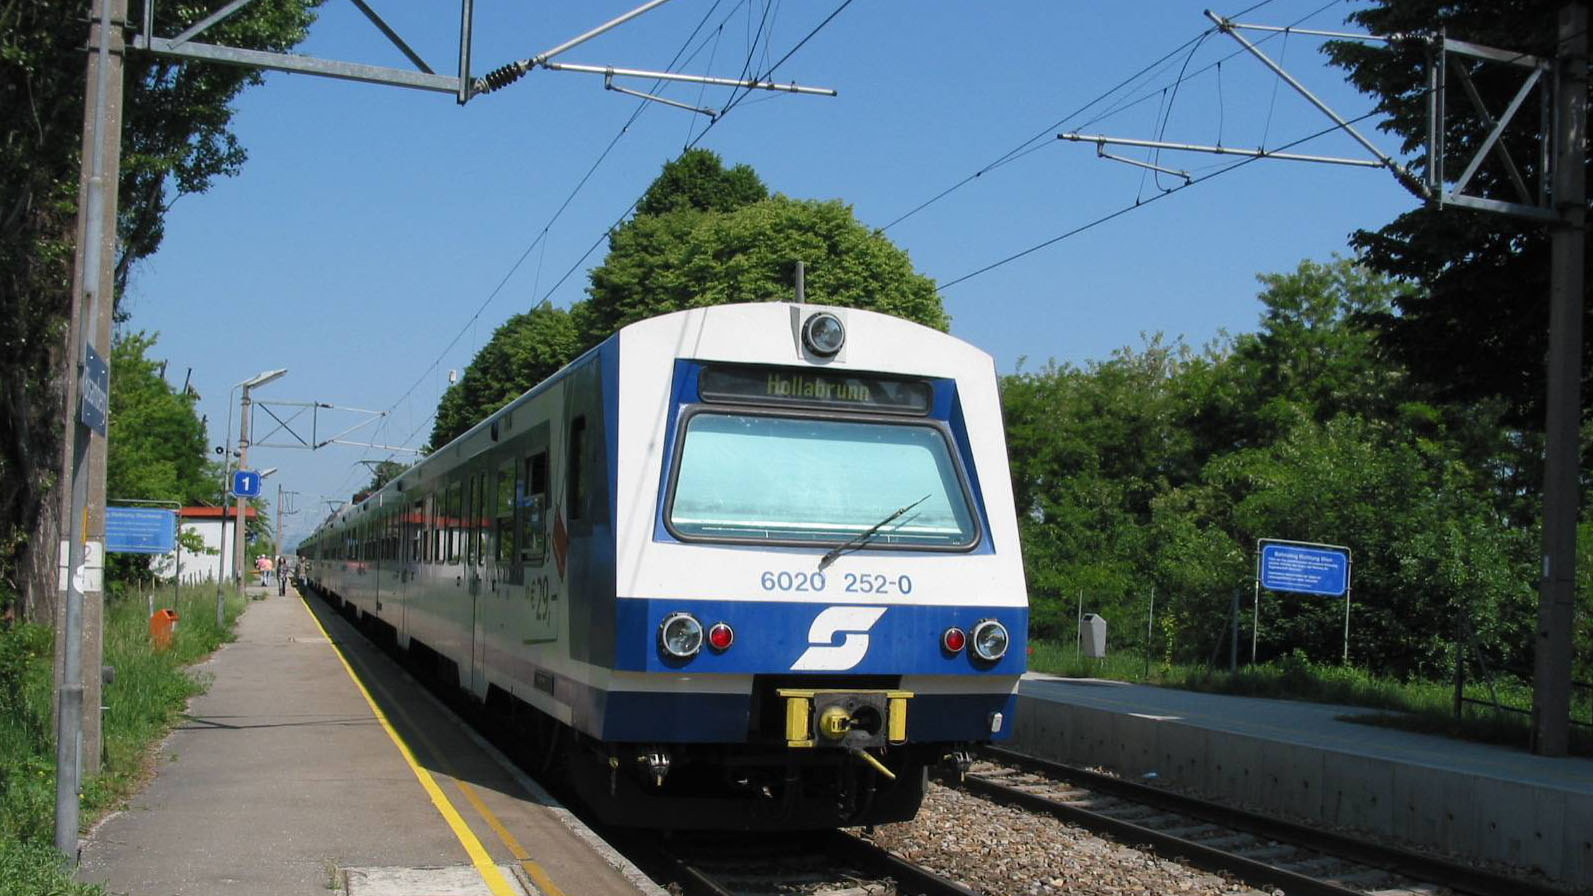 Zug der S-Bahn-Linie 3 fährt am Bahnsteig 1 nach Hollabrunn ab.